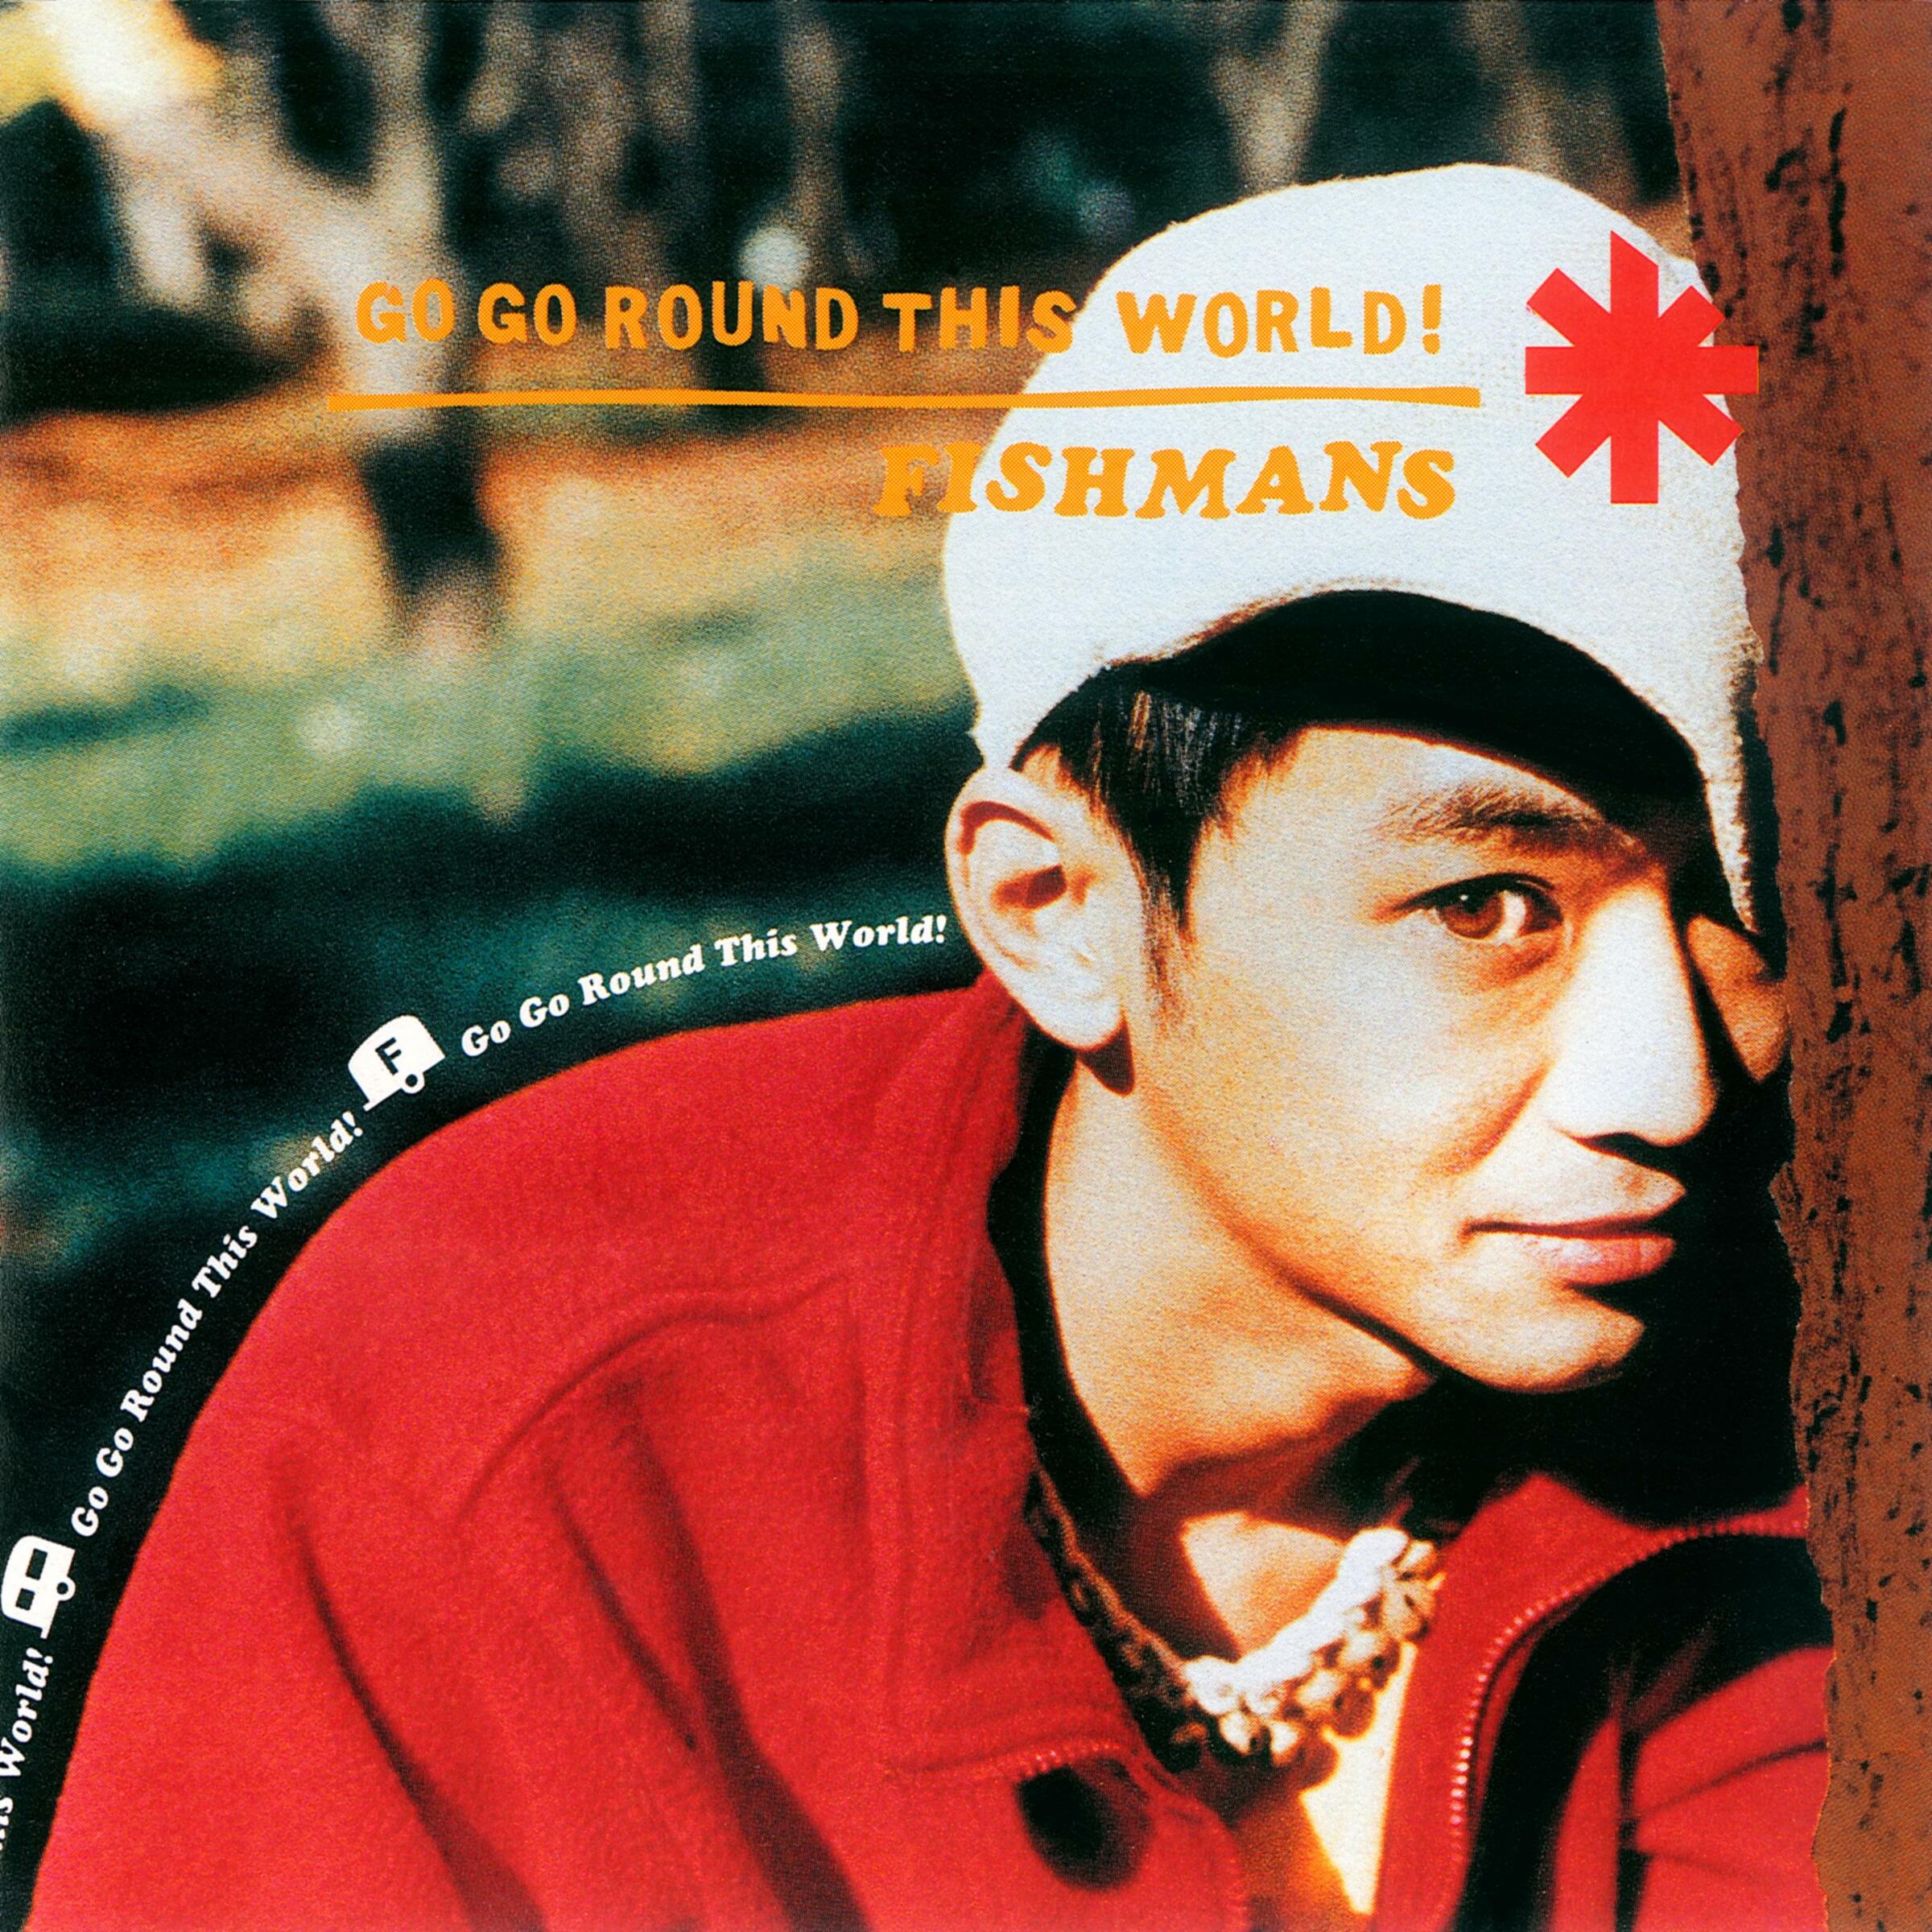 Fishmans - Go Go Round This World!(LTD Edition)